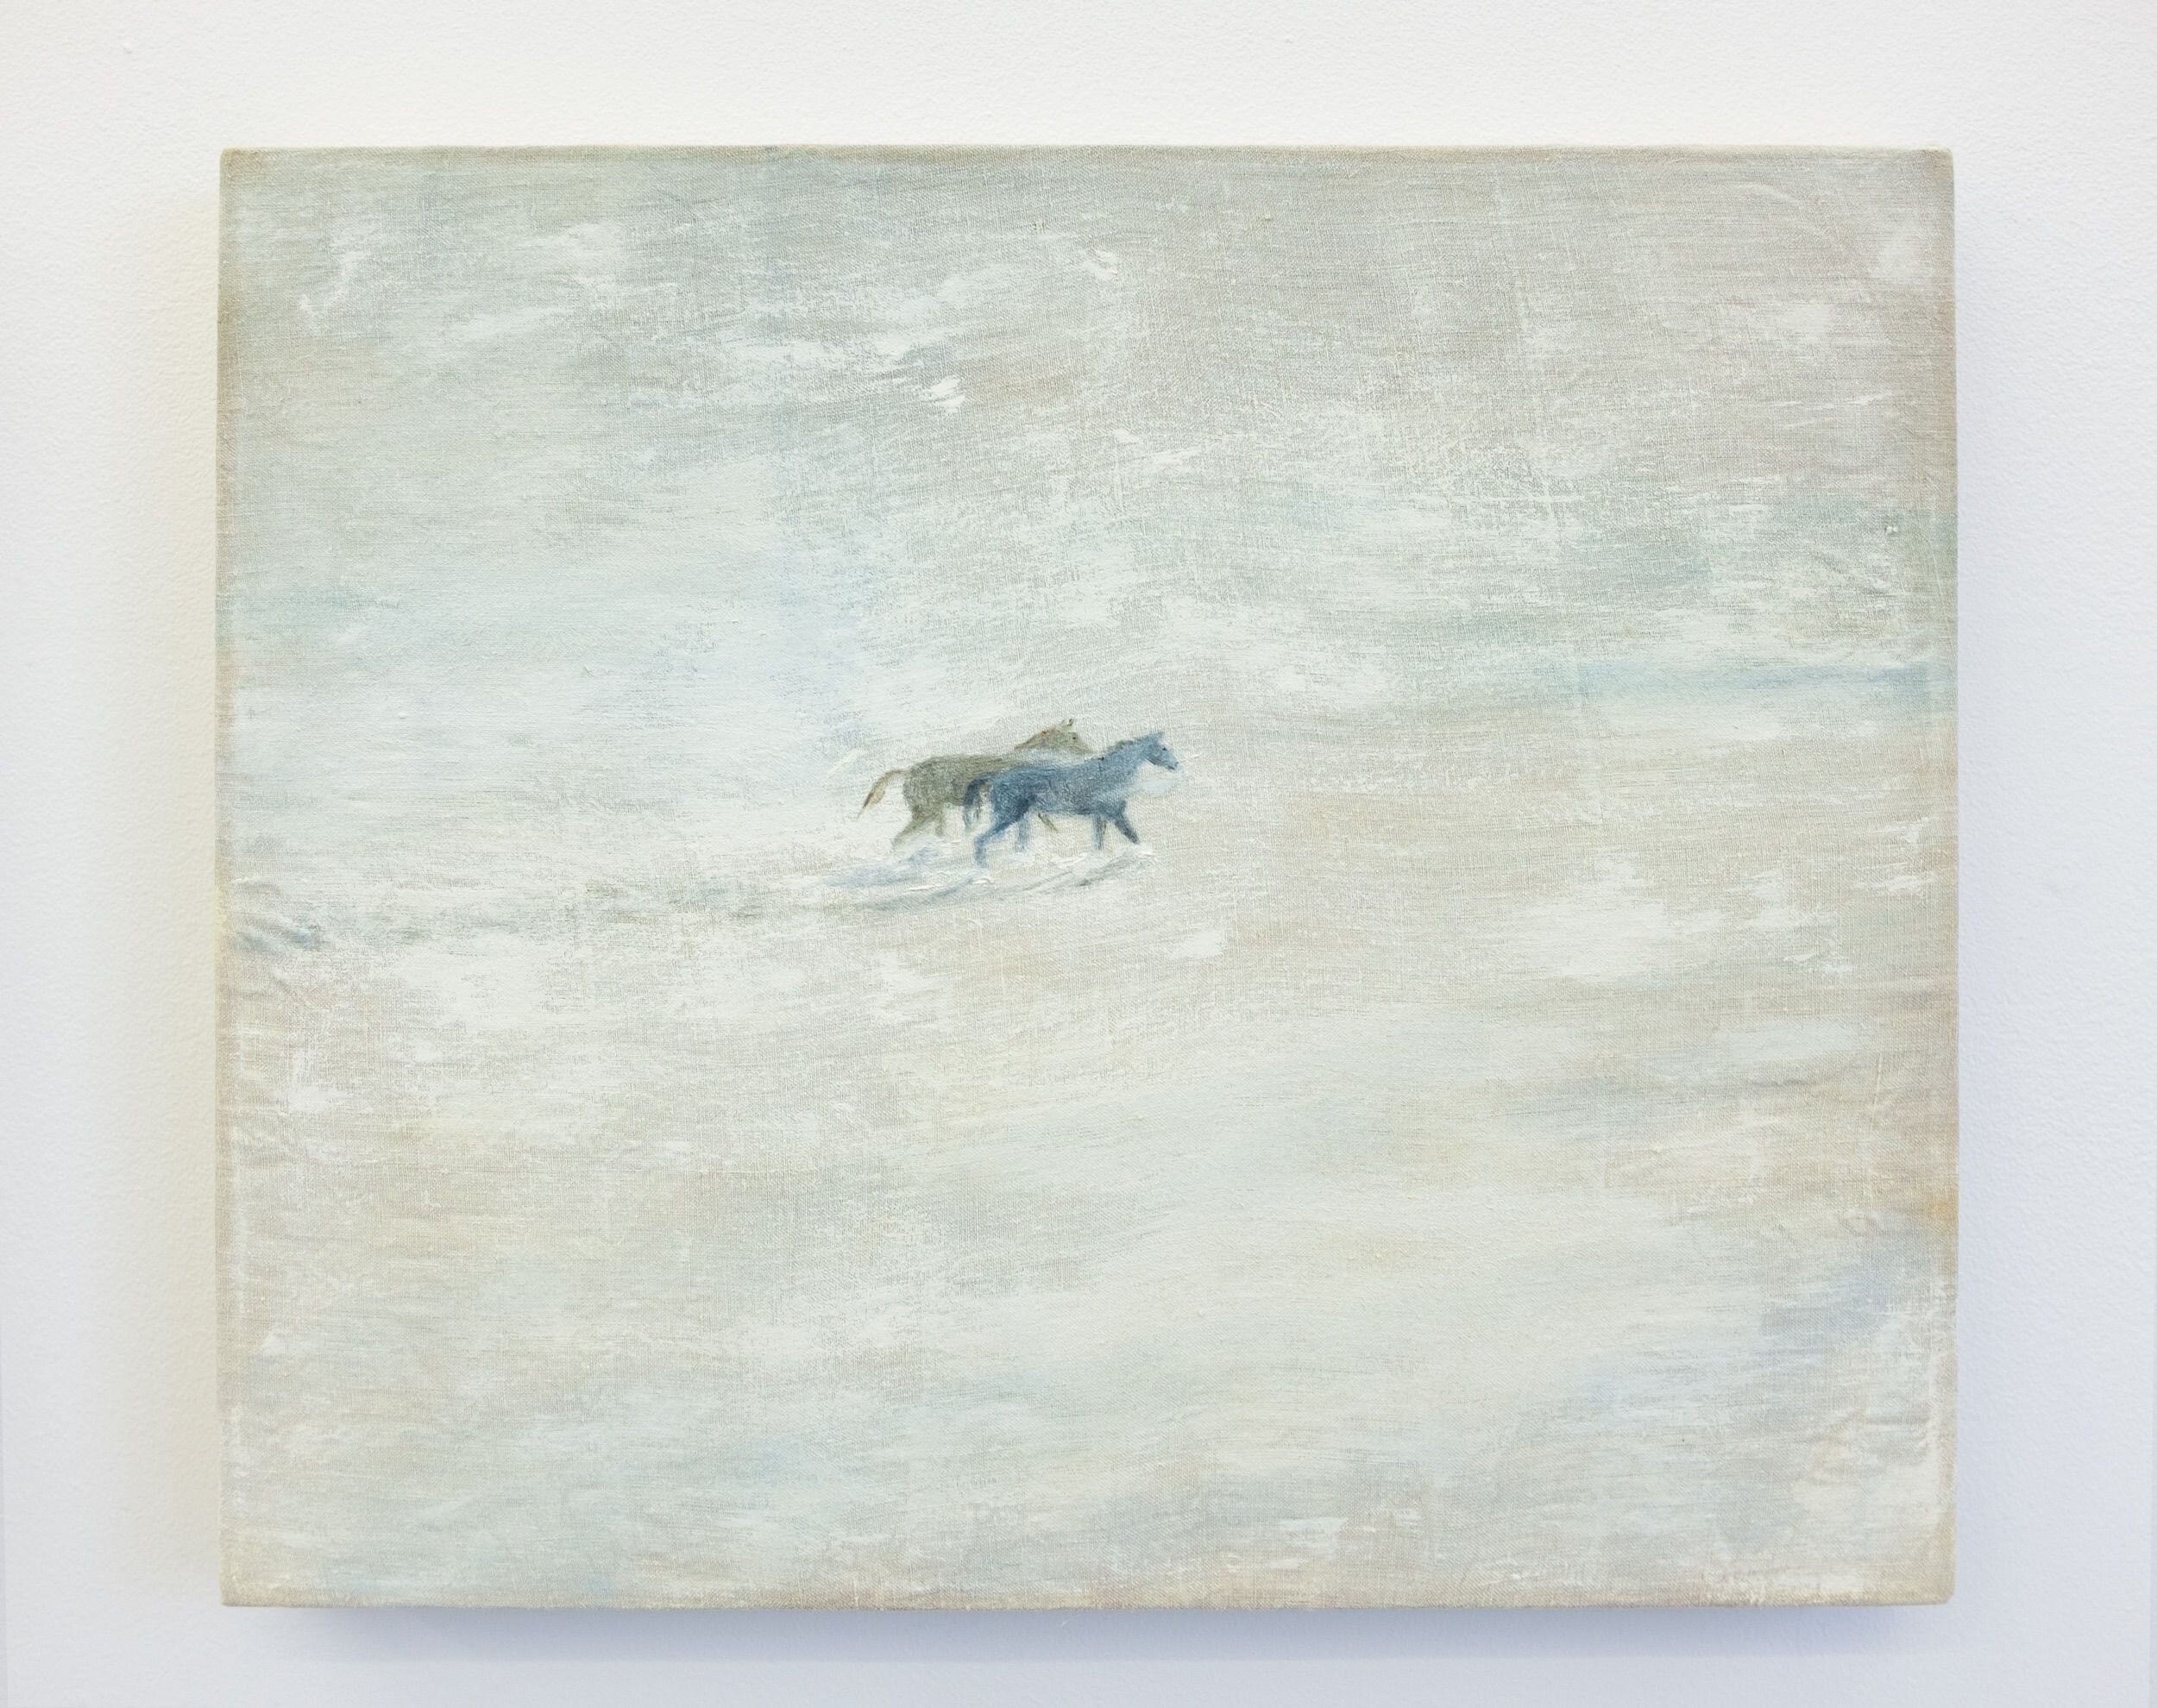 Katelyn Eichwald, 'Two Horses' 2020, Oil on linen. 18 x 15 in